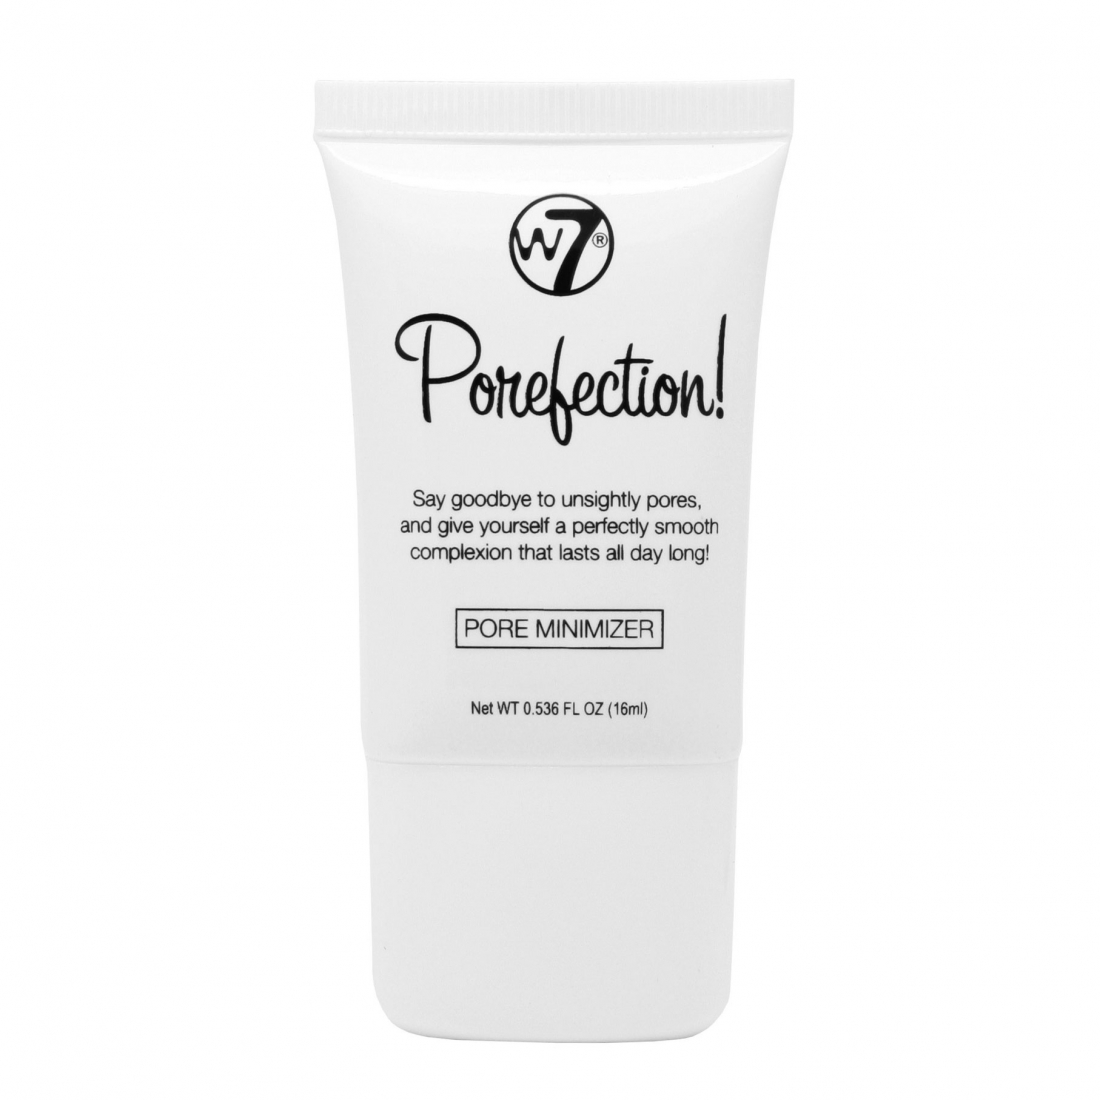 W7 - 'Porefection' Pore Minimizing